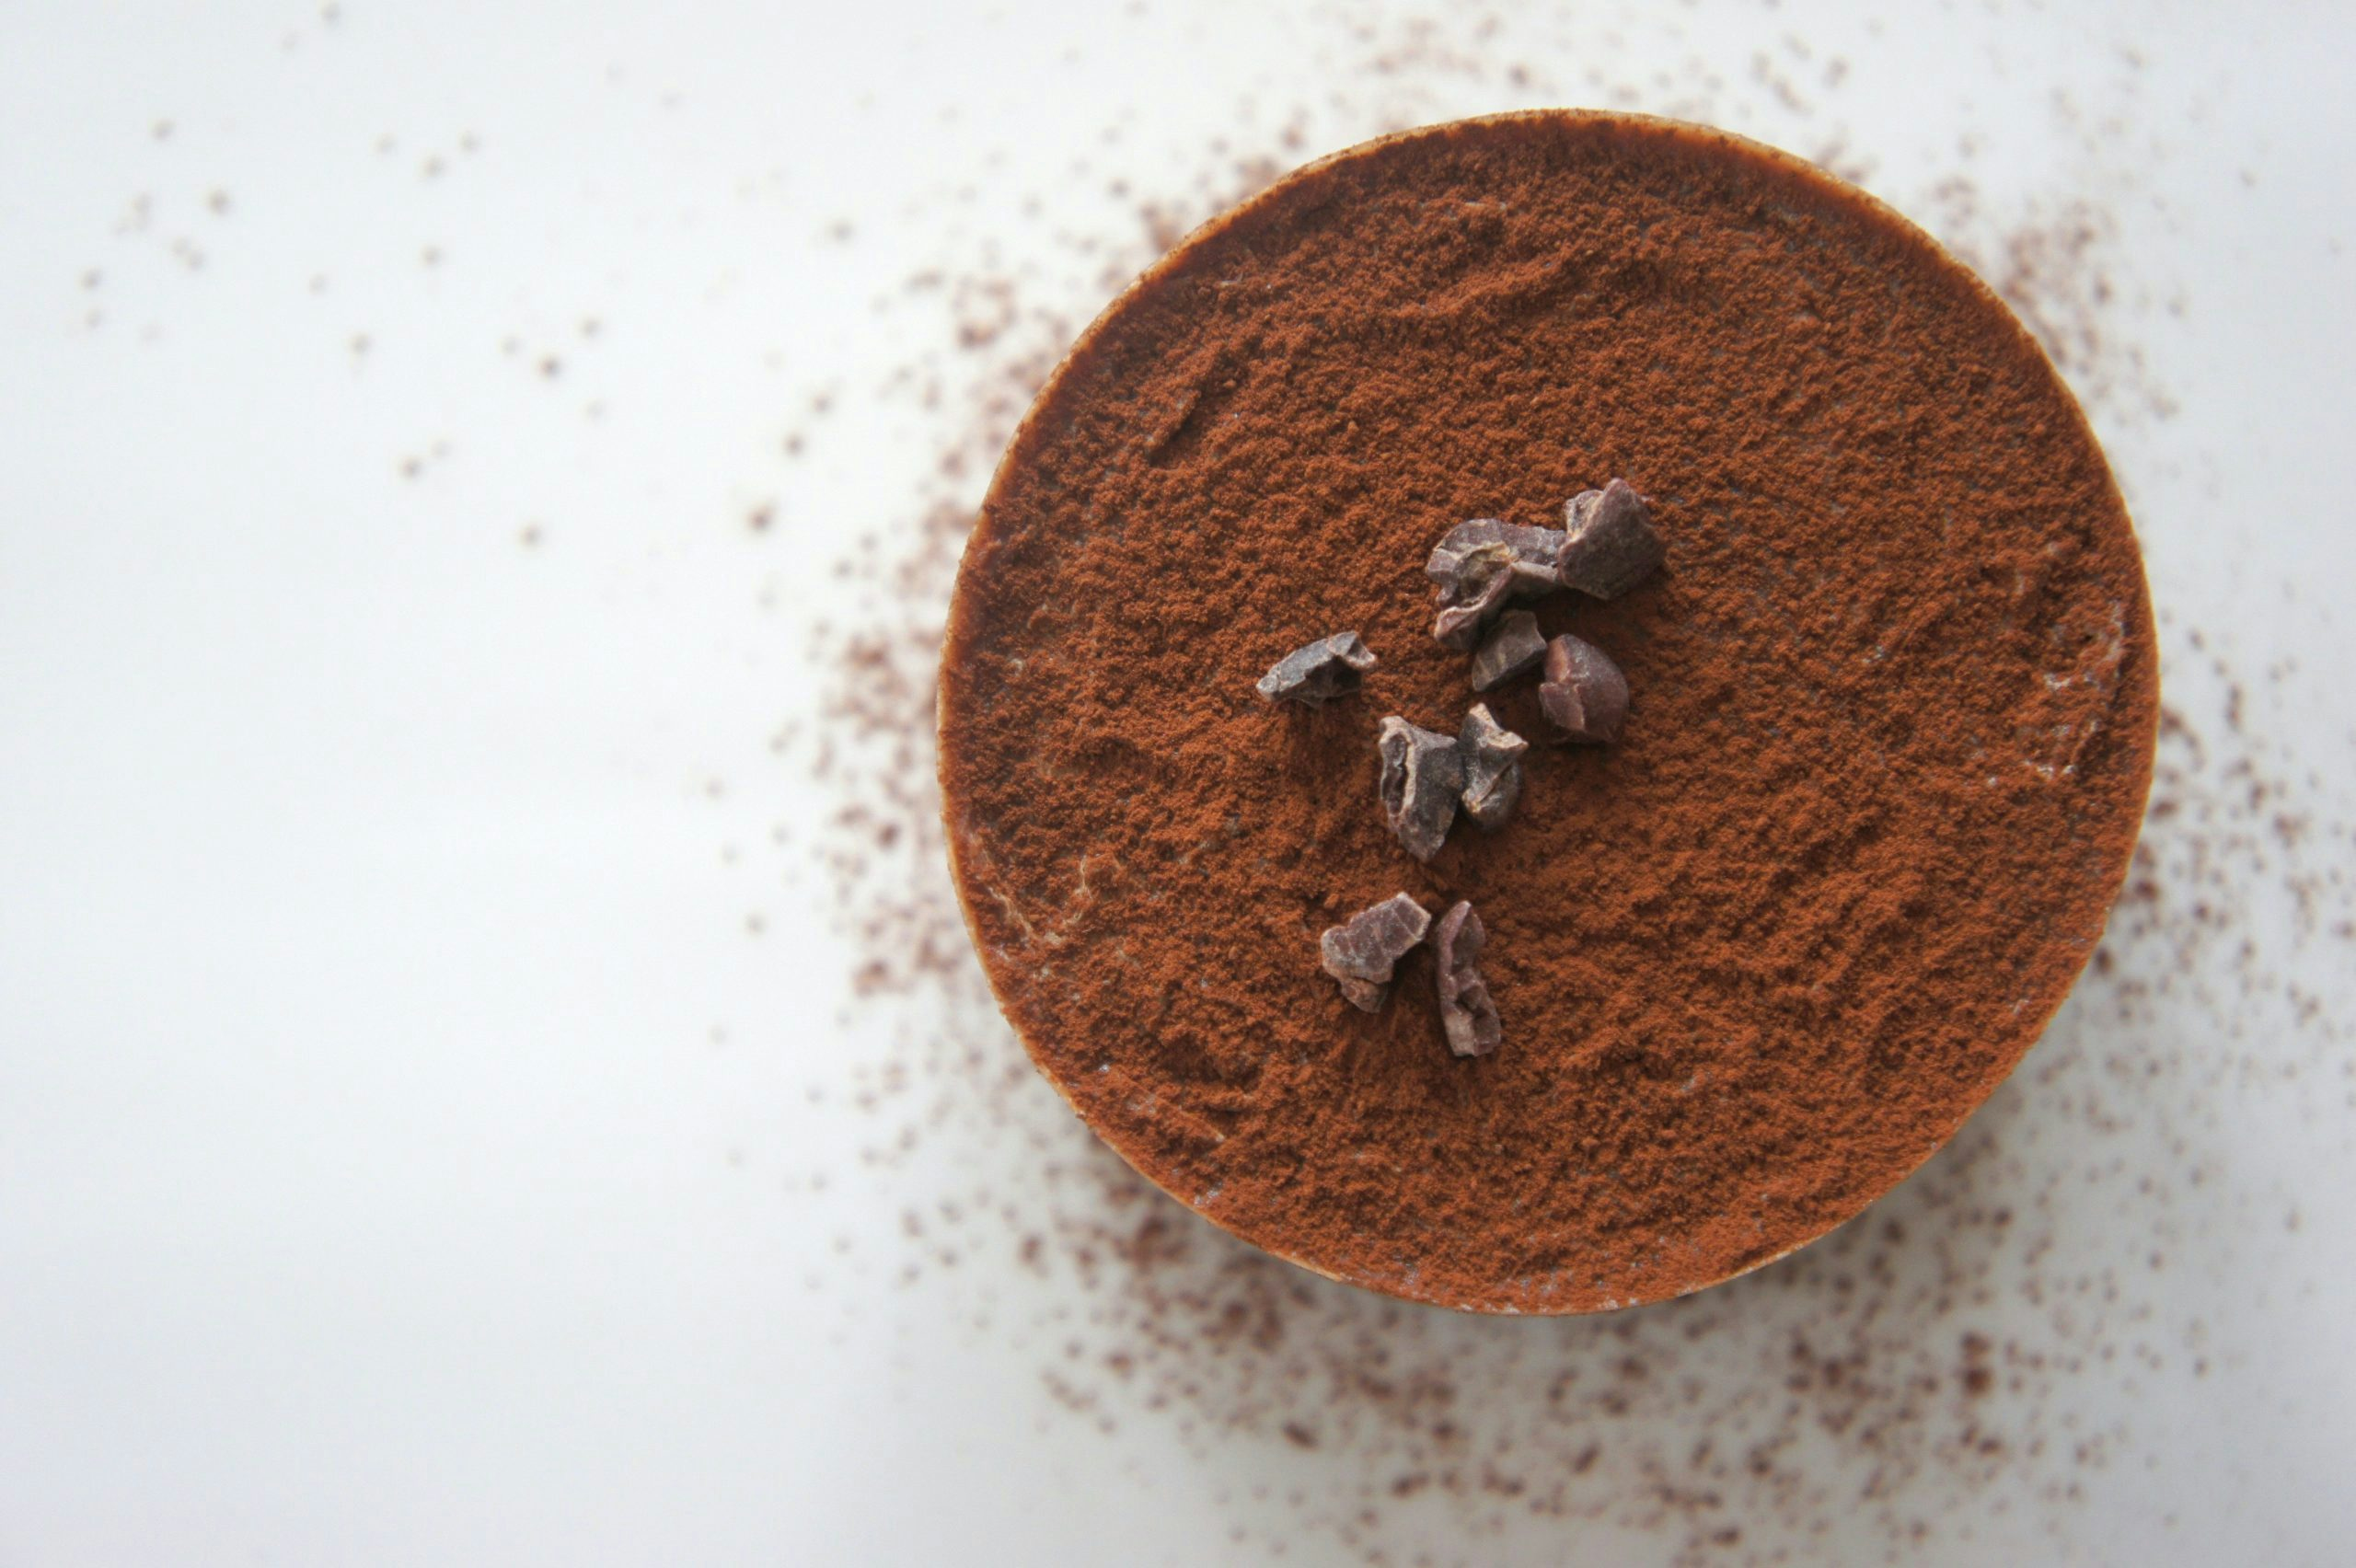 Cocoa powder mixing